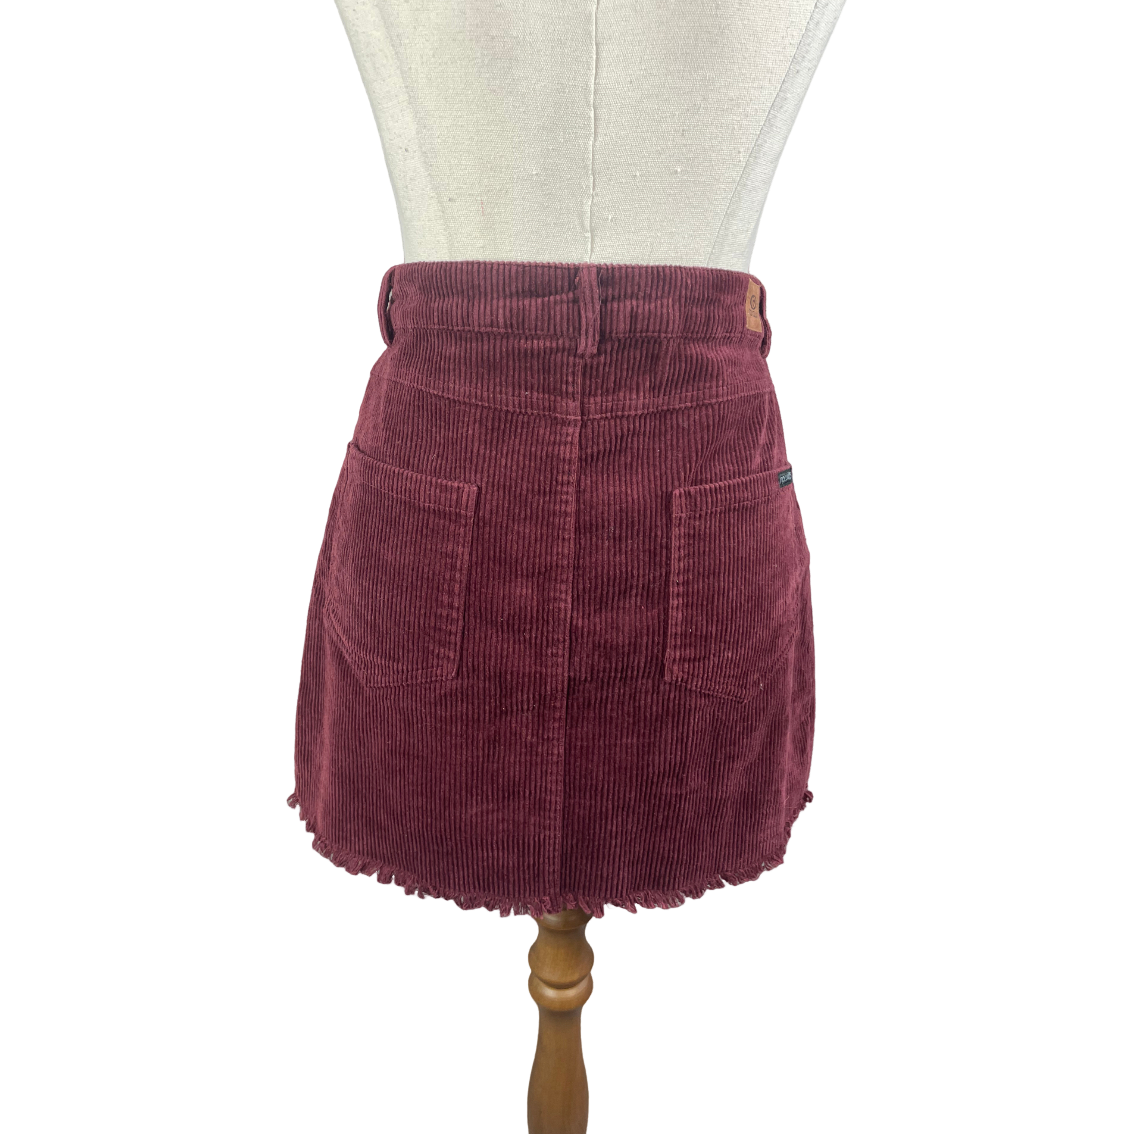 Ripcurl burgundy corduroy skirt | size 10